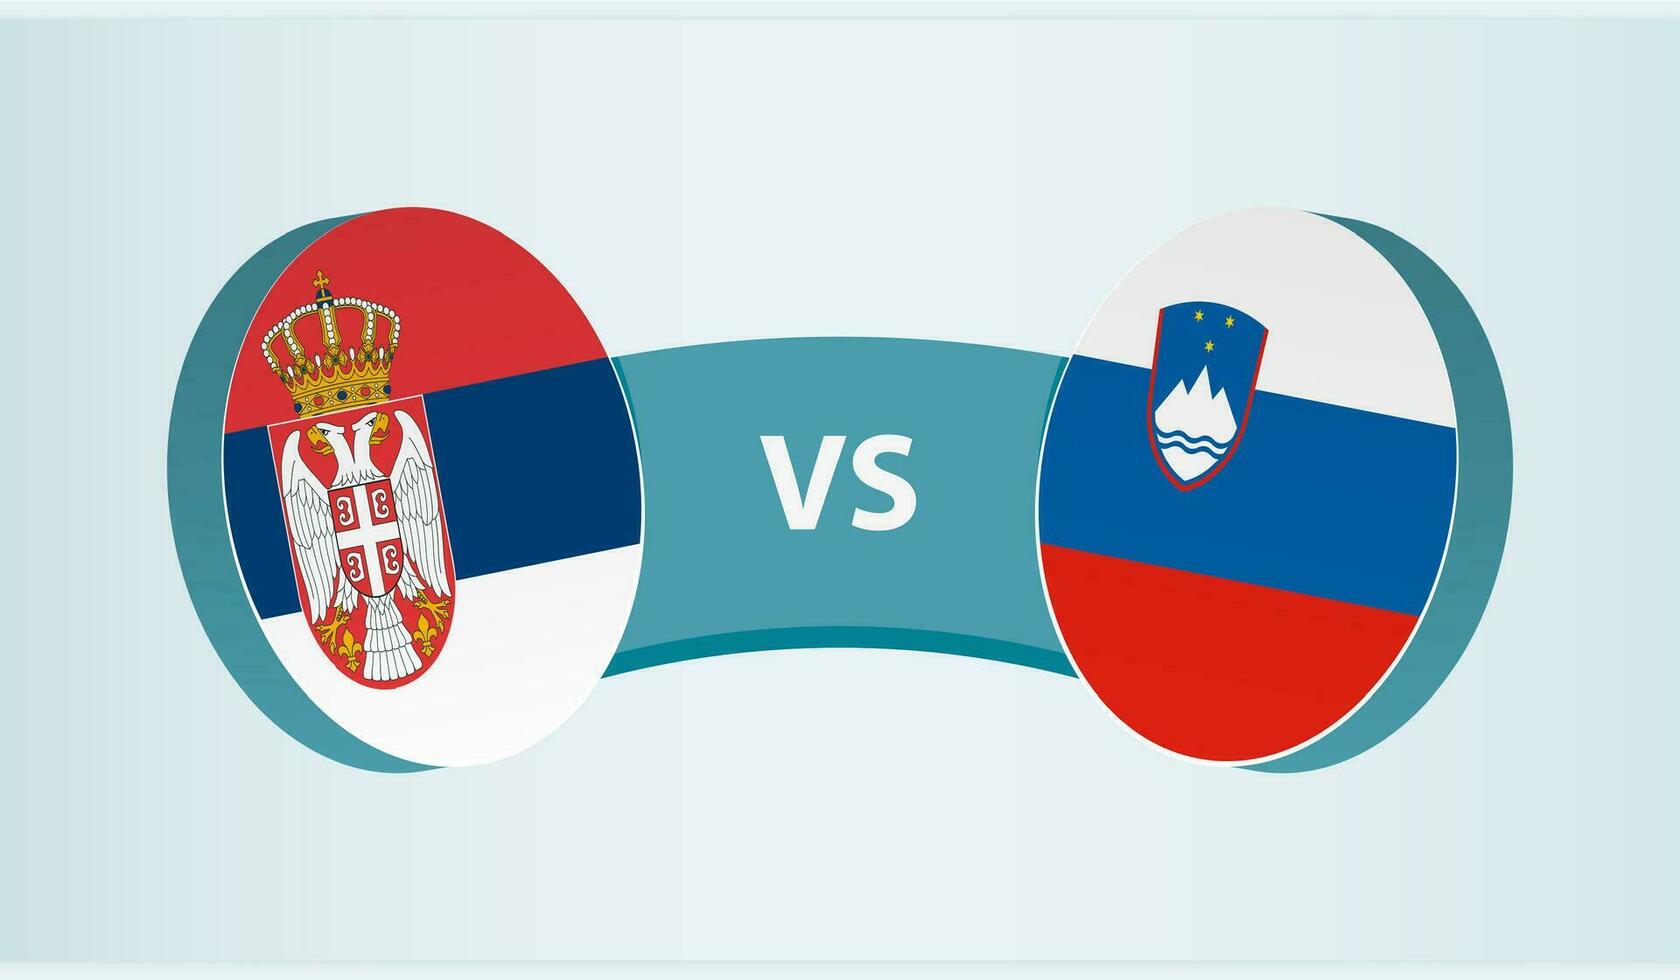 serbia mot Slovenien, team sporter konkurrens begrepp. vektor